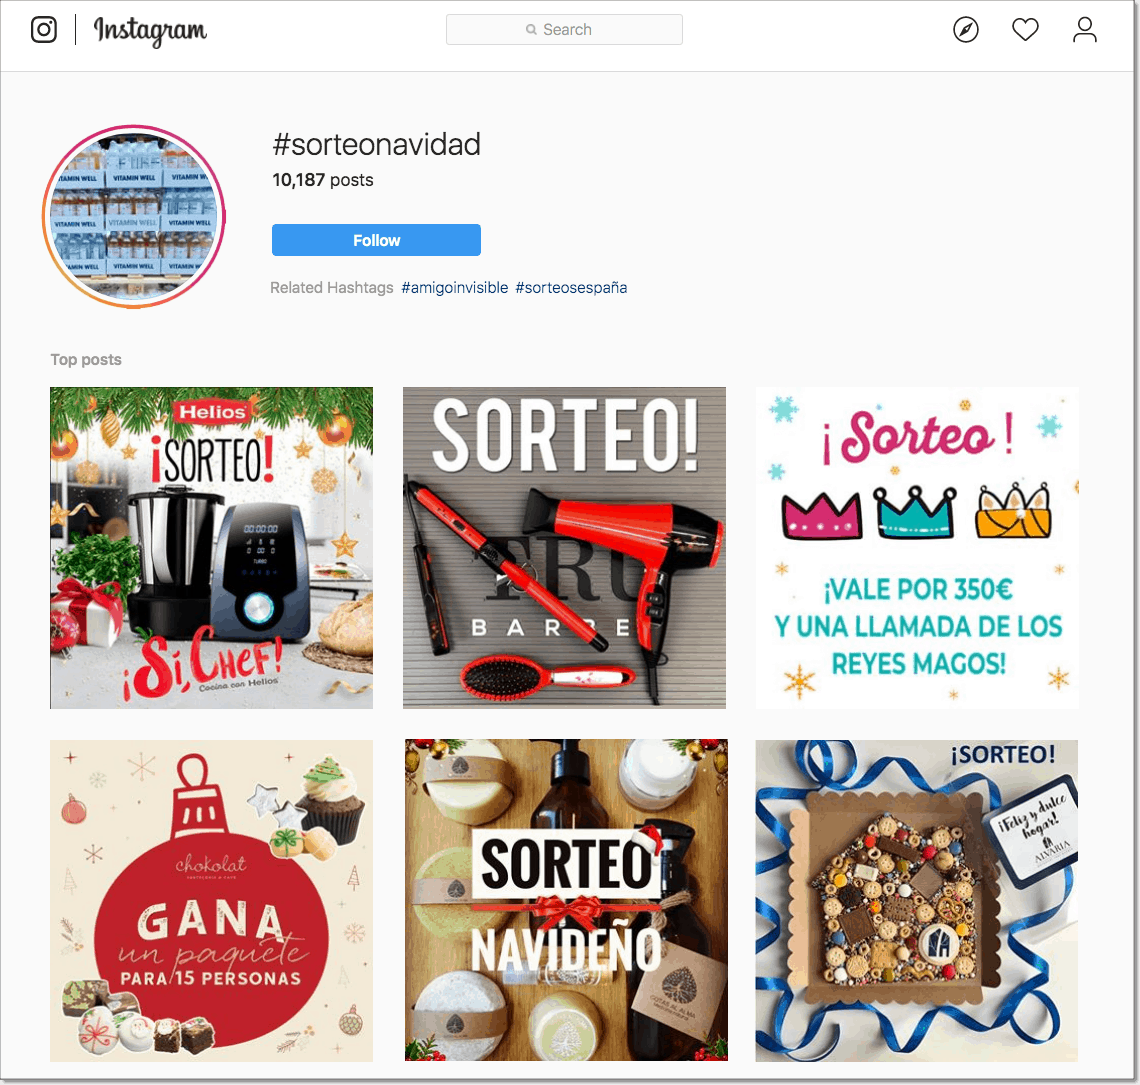 hashtag-sorteo-instagram-easypromos.png